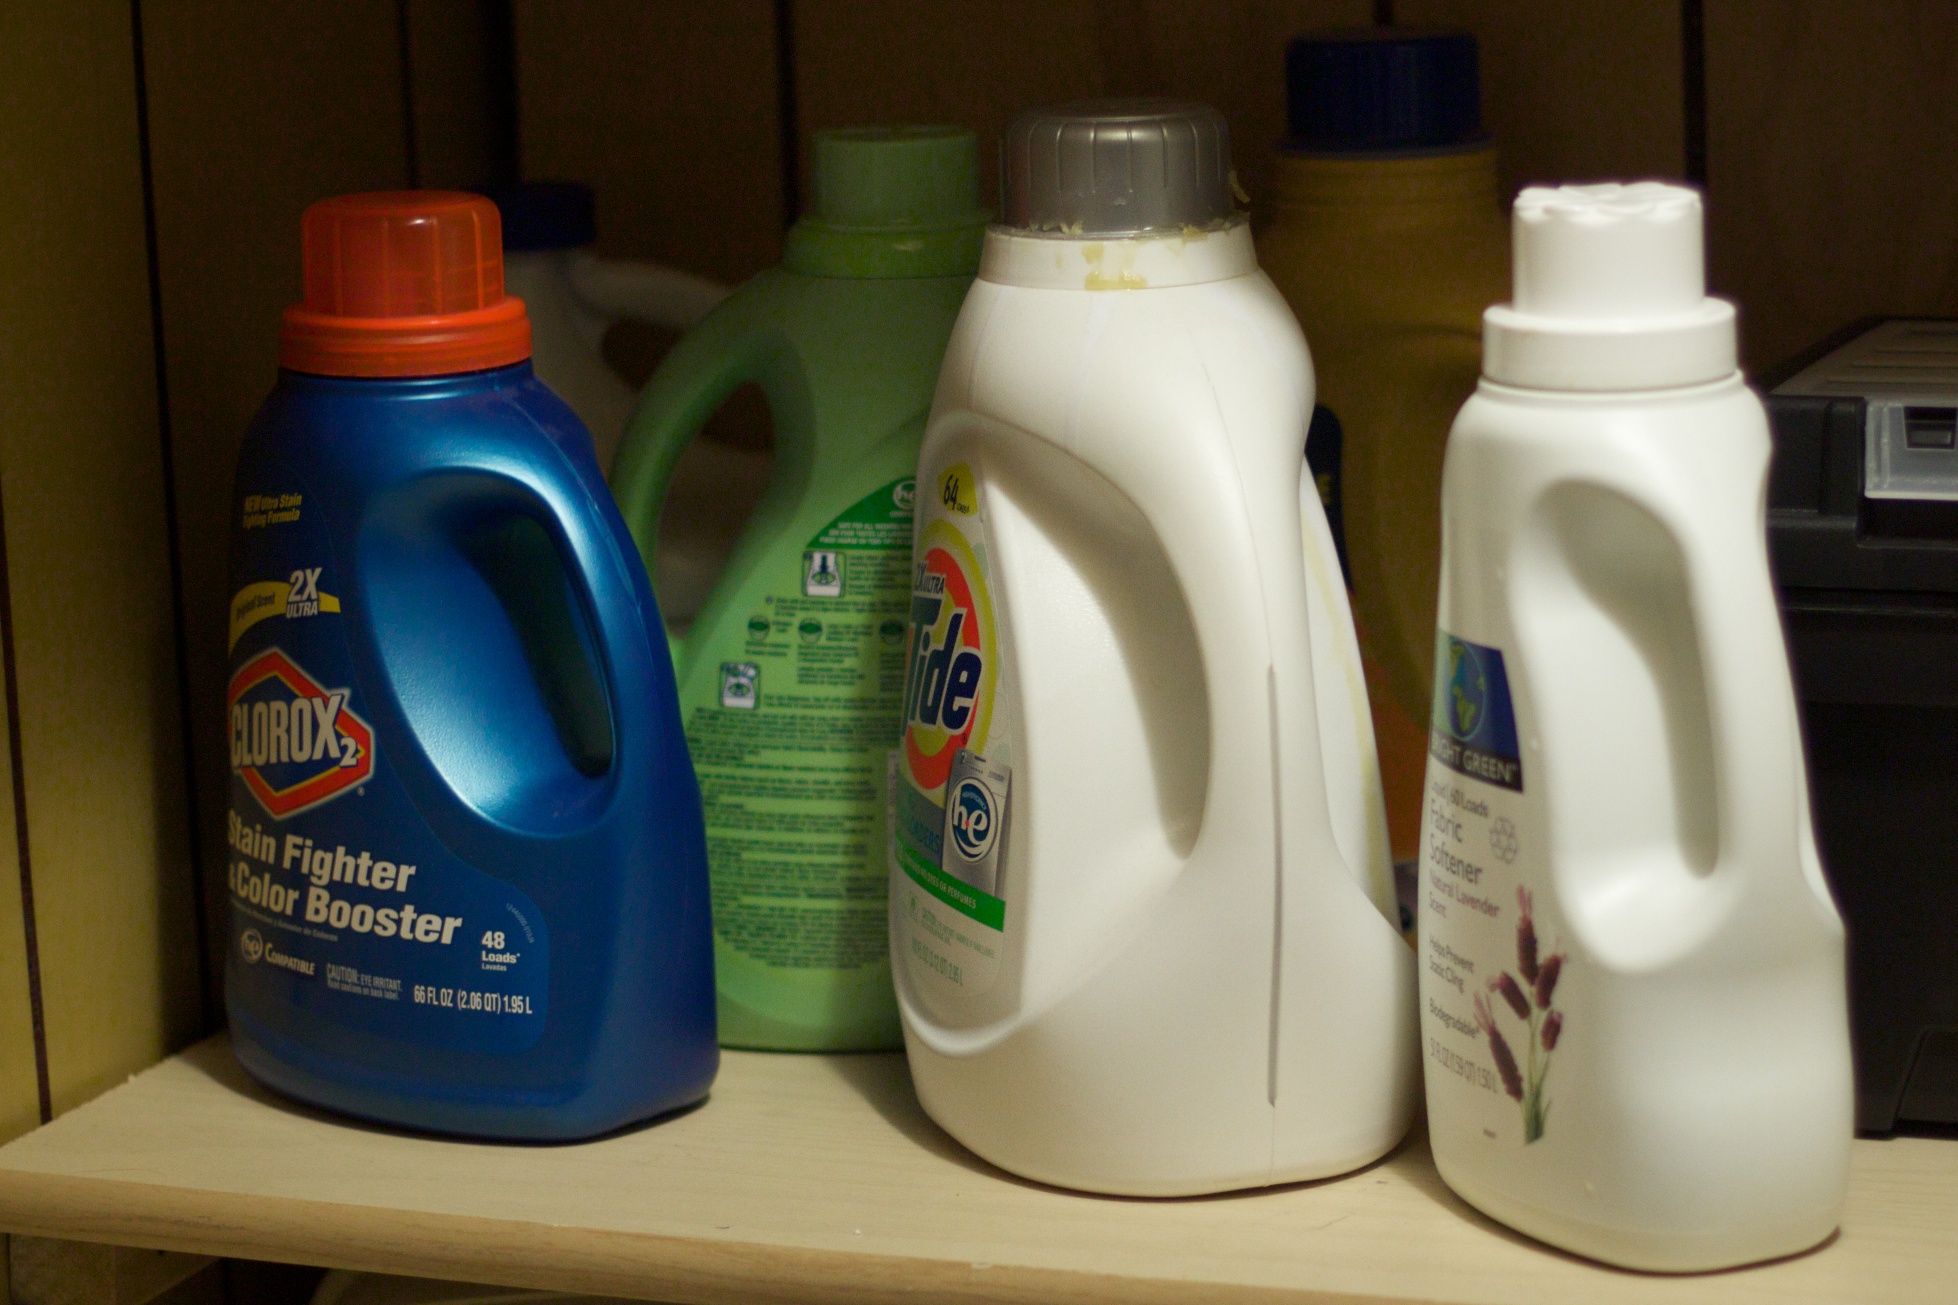 bottles of toilet cleaner are shown on the shelf